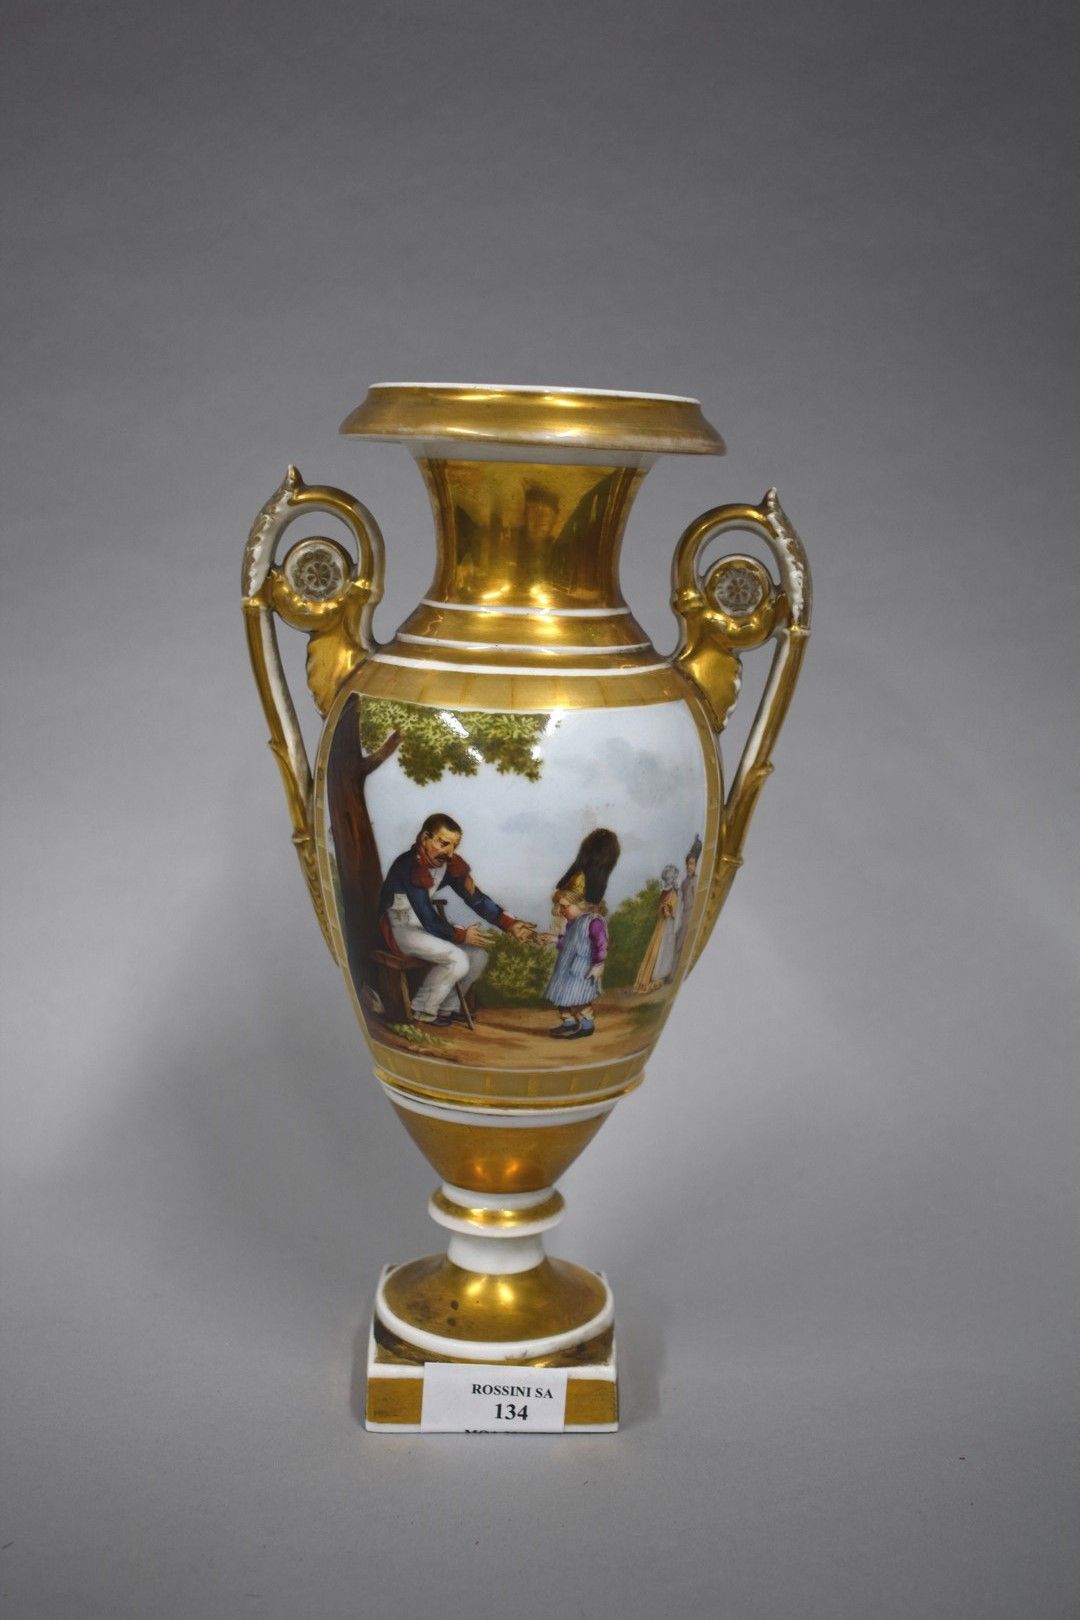 Null 巴黎 19世纪

一个美第奇瓷器花瓶上装饰着一个将帽子借给小女孩的格罗格纳人。